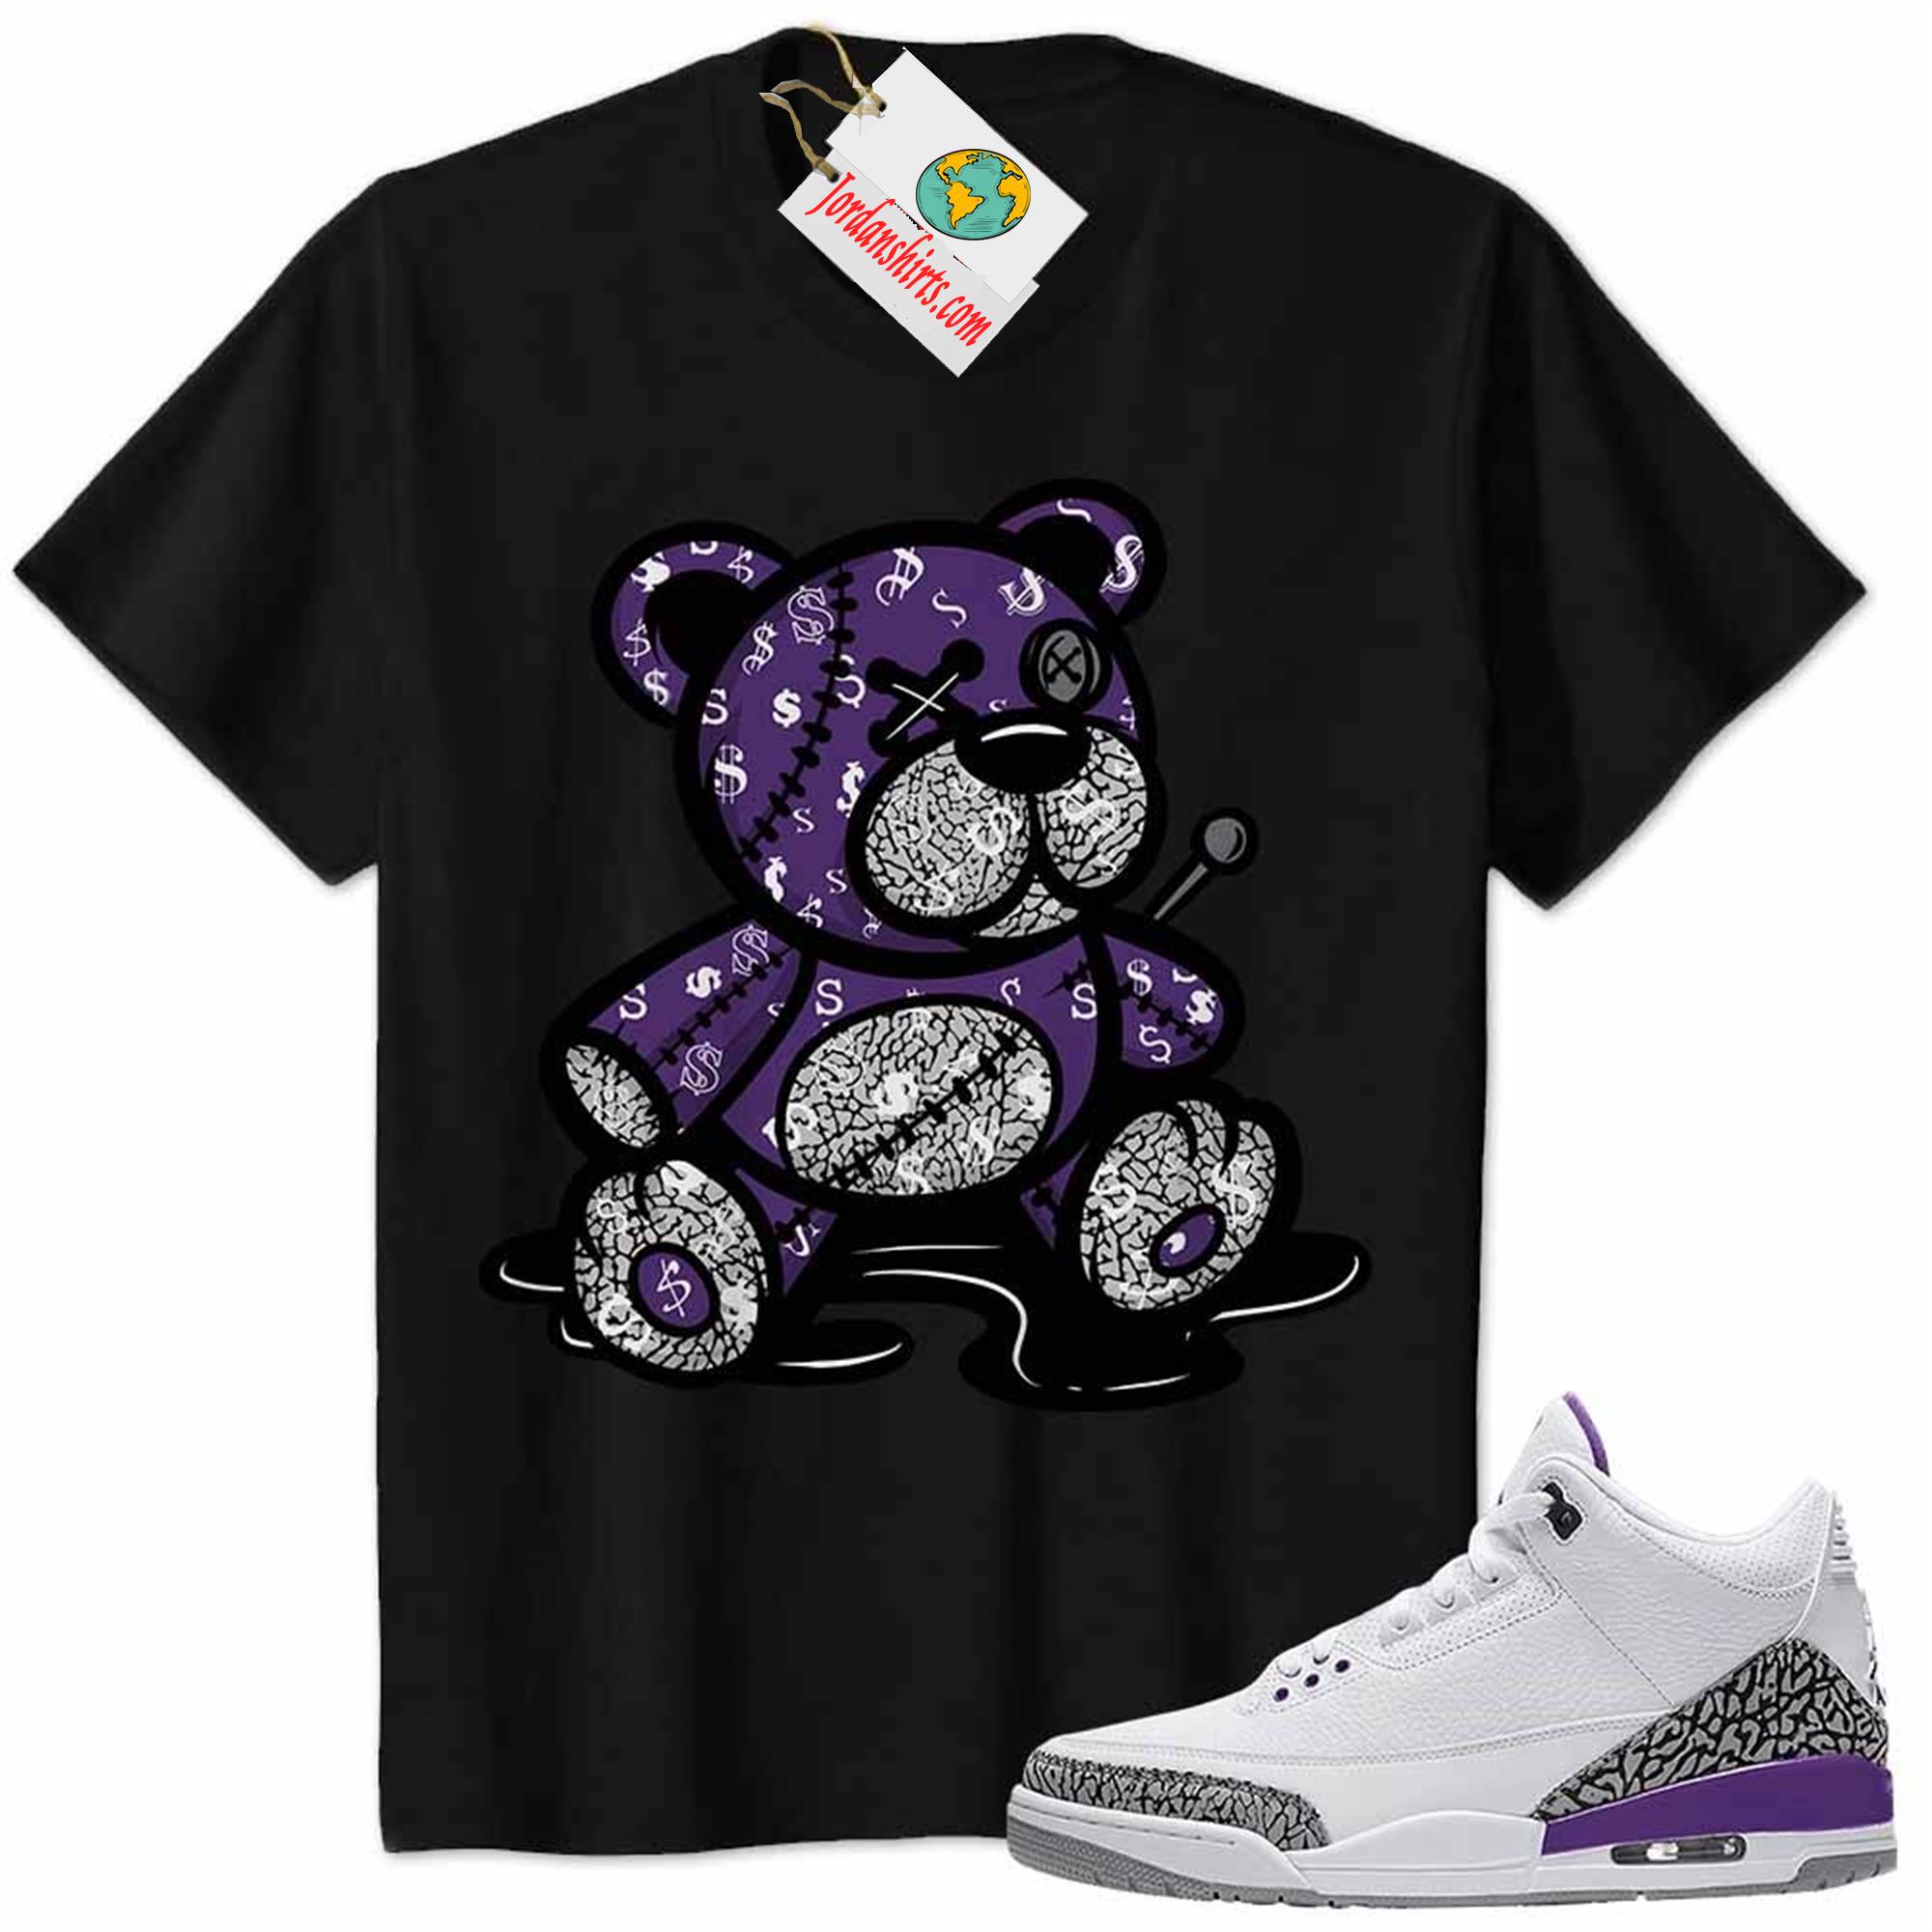 Jordan 3 Shirt, Jordan 3 Wmns Dark Iris Violet Ore Shirt Teddy Bear All Money In Black Plus Size Up To 5xl